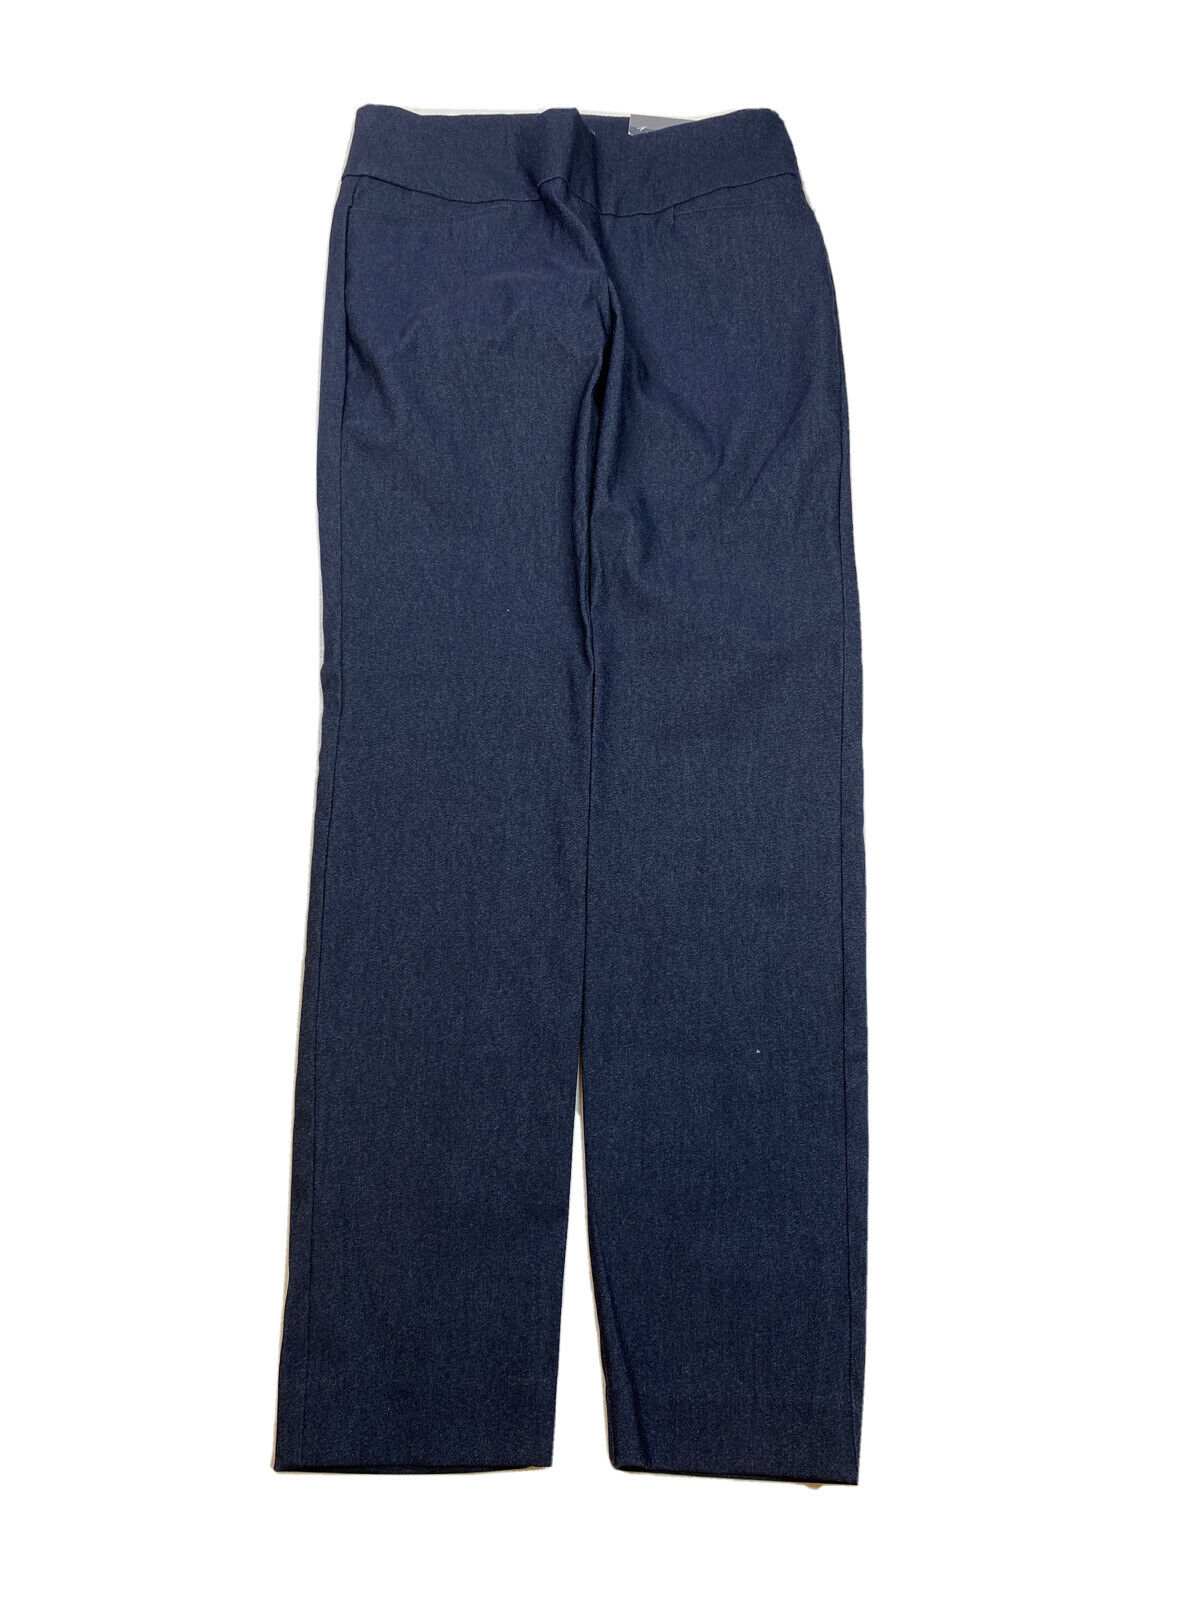 NEW Van Heusen Women's Blue Super Stretch Pull On Pants - 2 Short